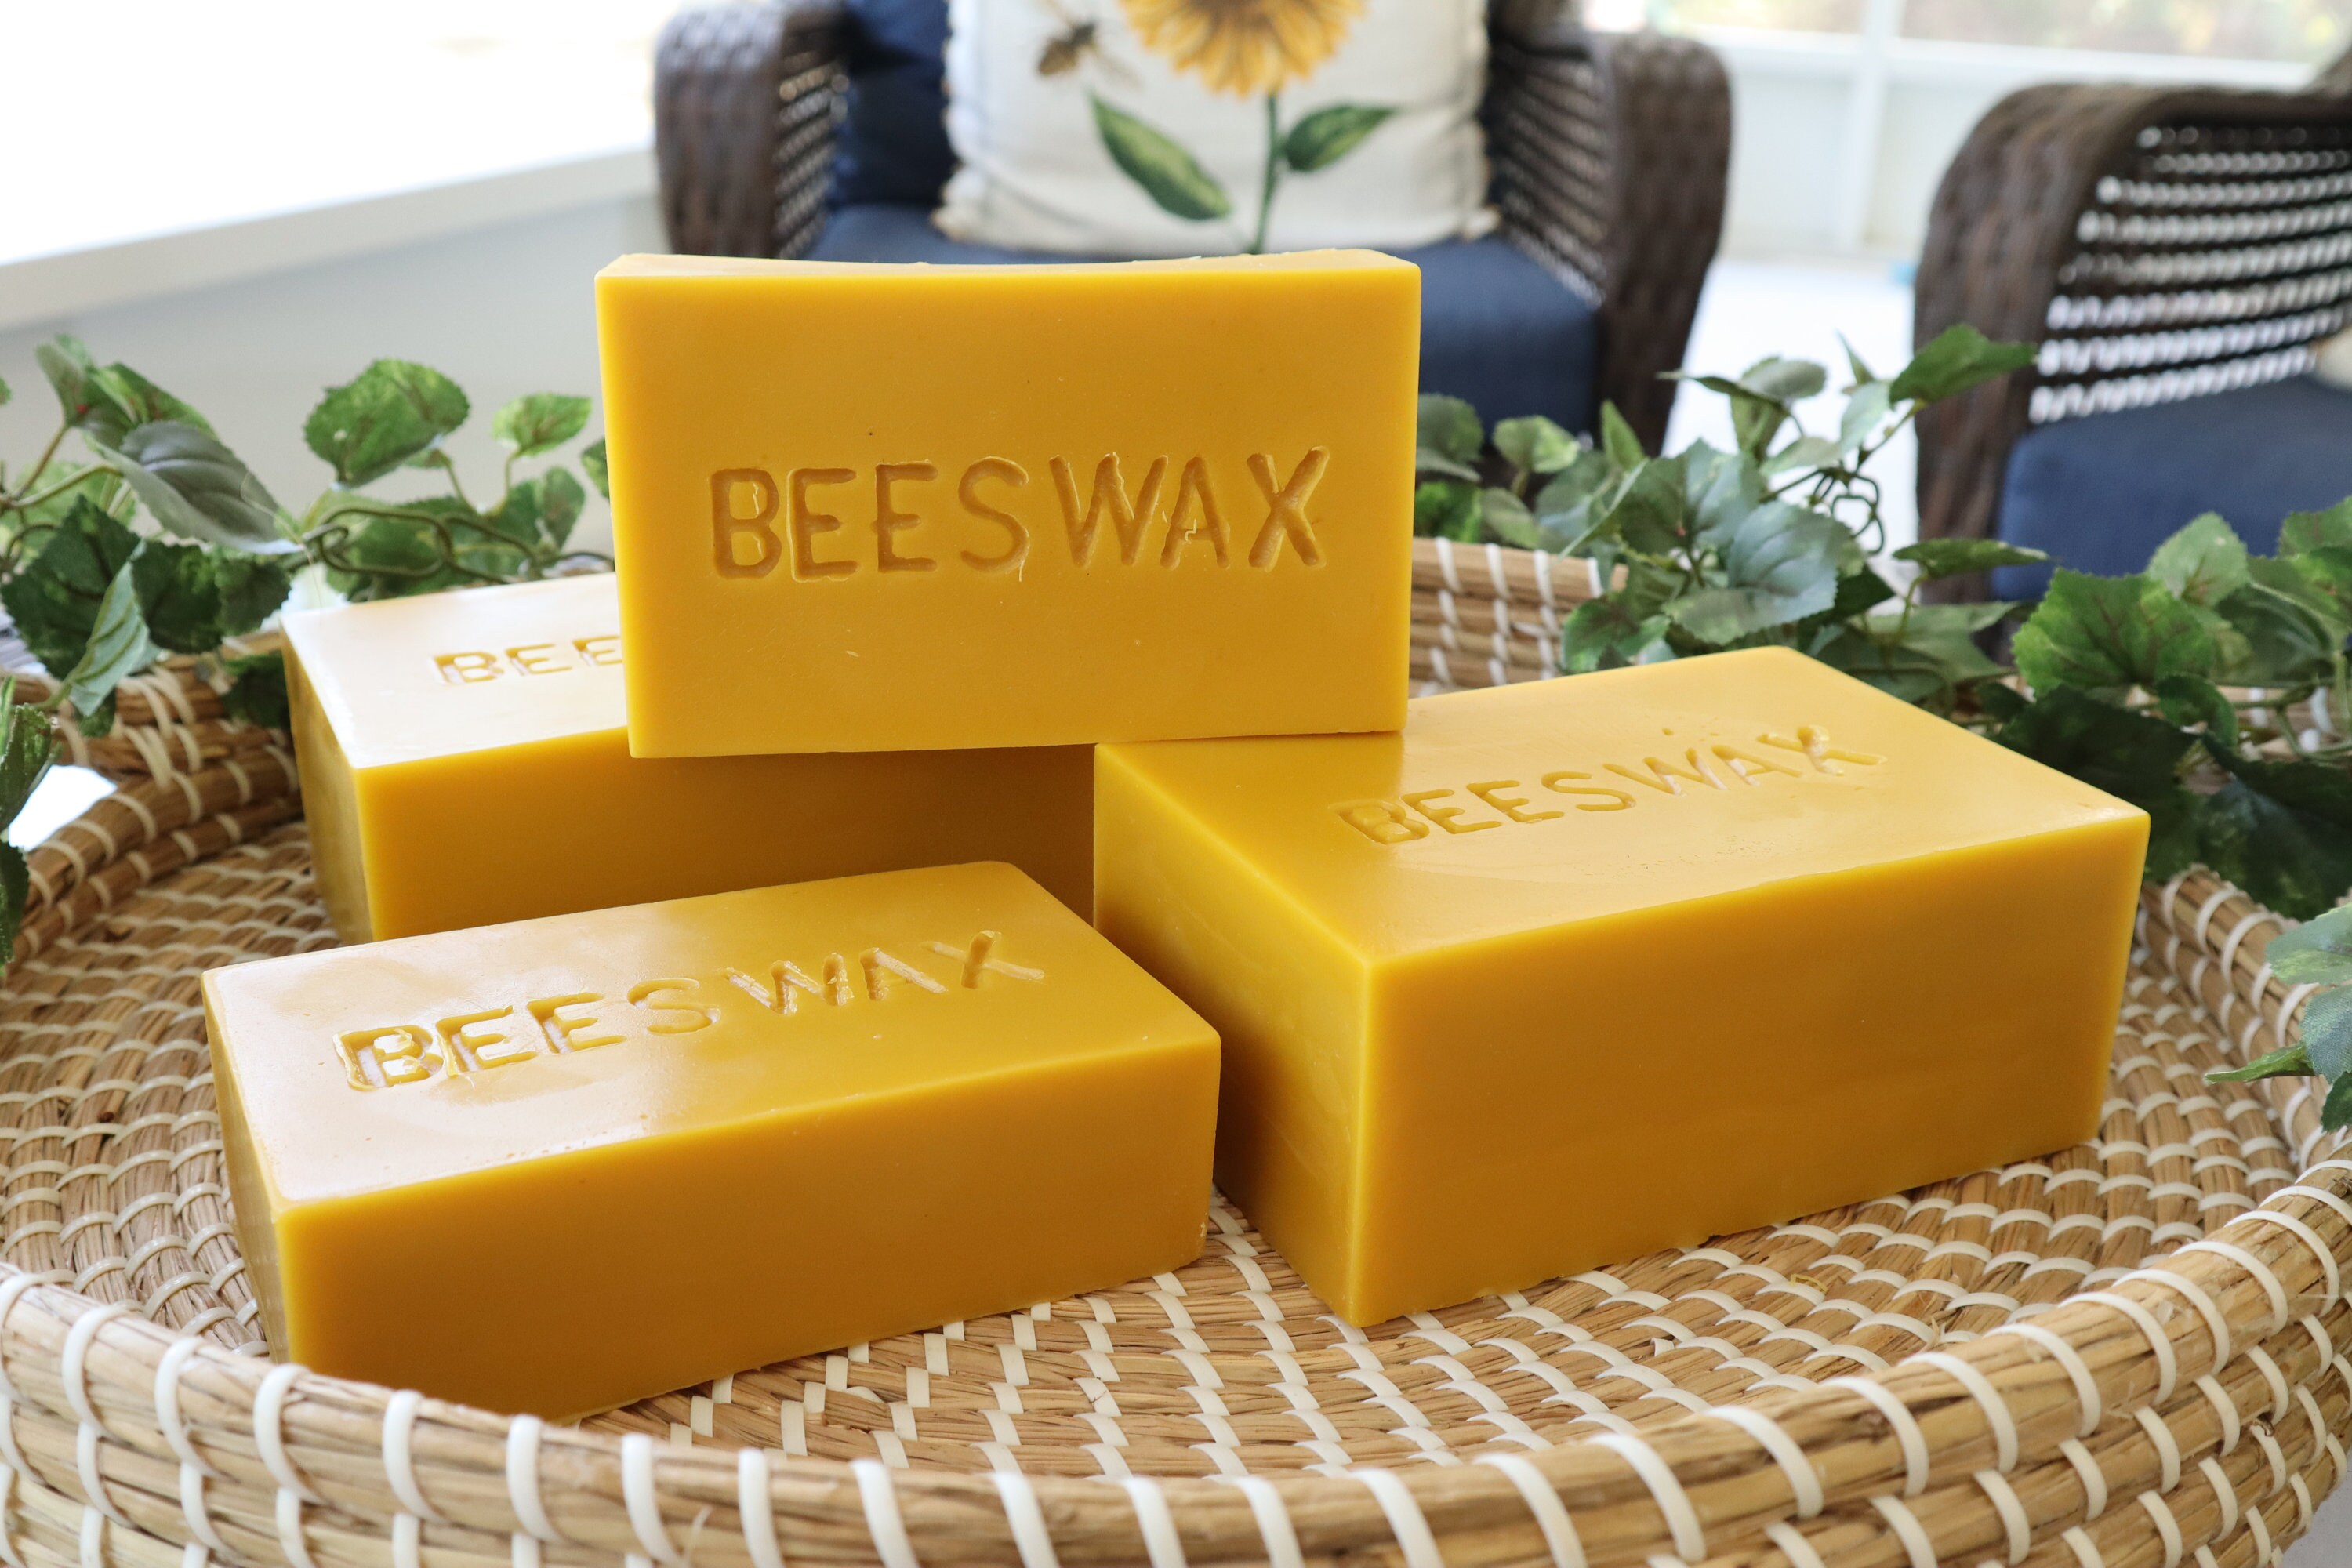 Bulk Beeswax Block/brick Natural Yellow or White Large Filtered 